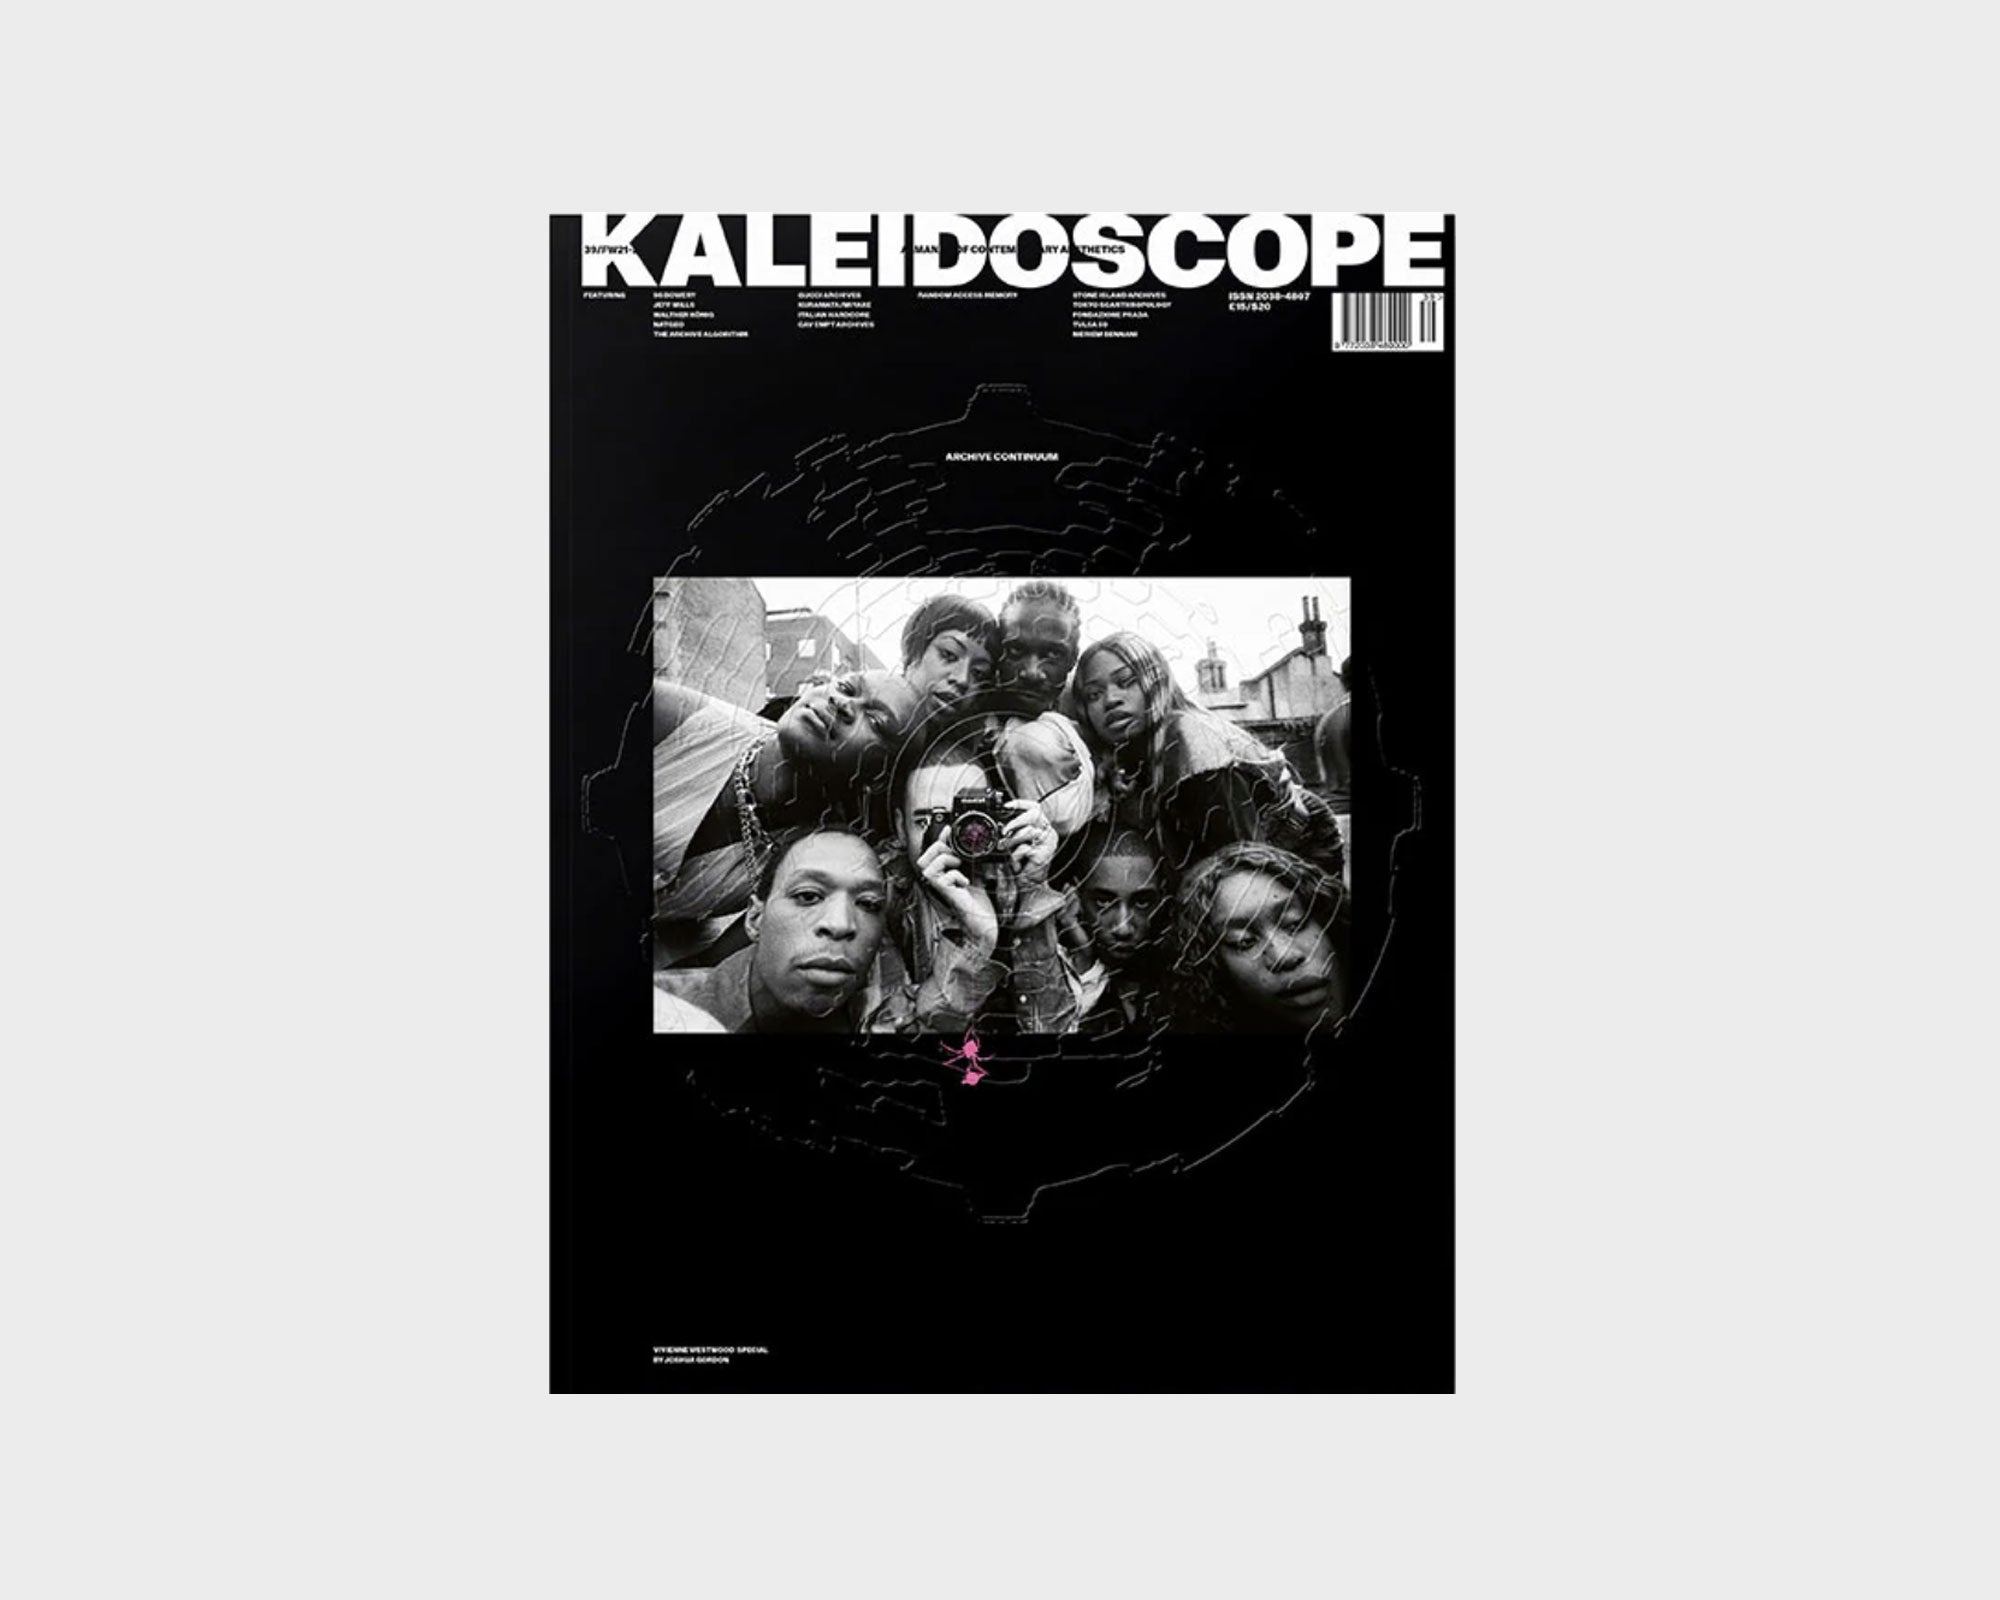 Kaleidoscope Magazine 39